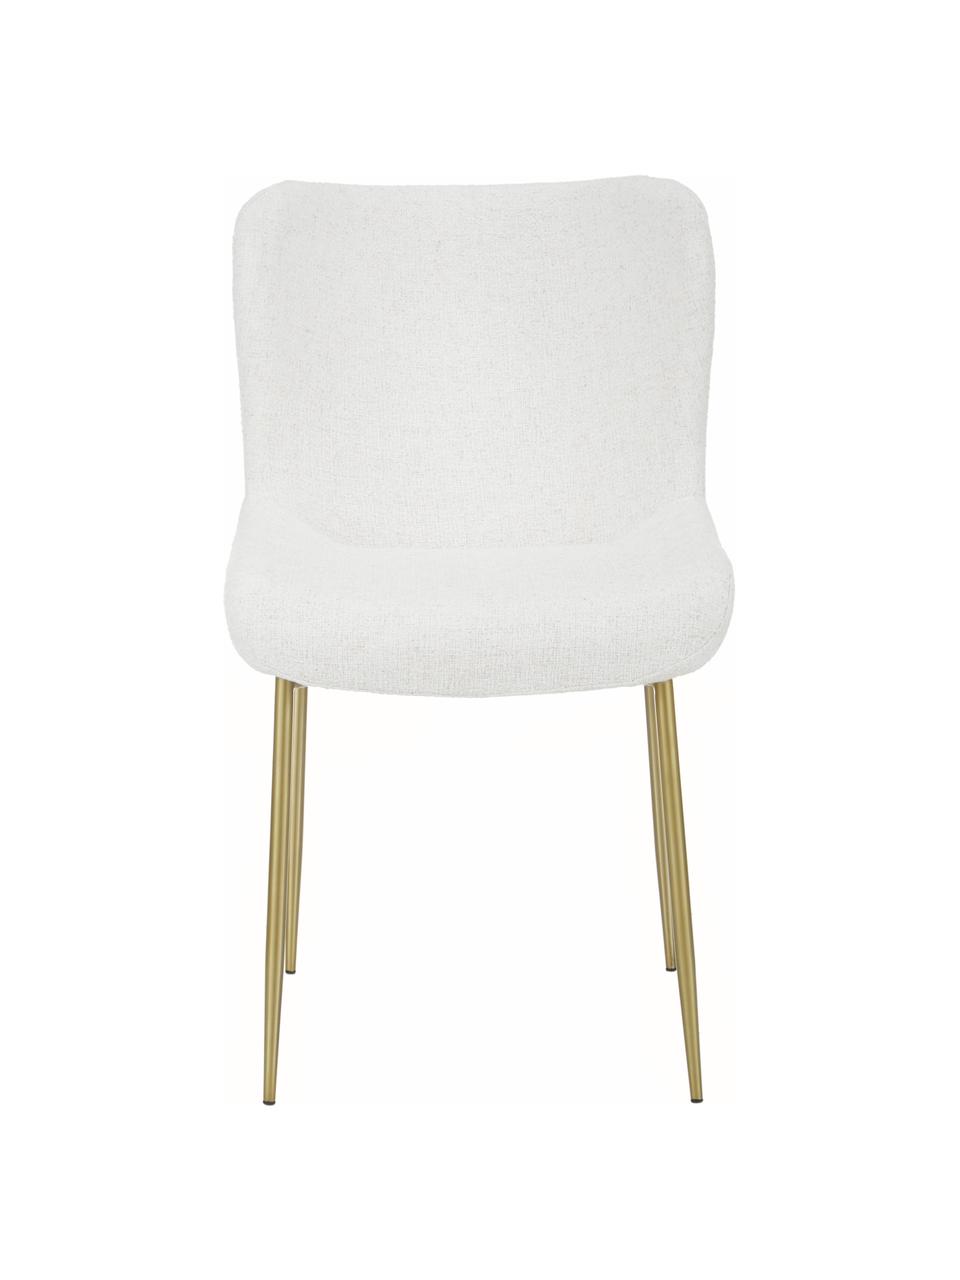 Bouclé-gestoffeerde stoel Tess in crèmewit, Bekleding: 70% polyester, 20% viscos, Poten: gepoedercoat metaal, Bouclé crèmewit, goudkleurig, B 49 x D 64 cm